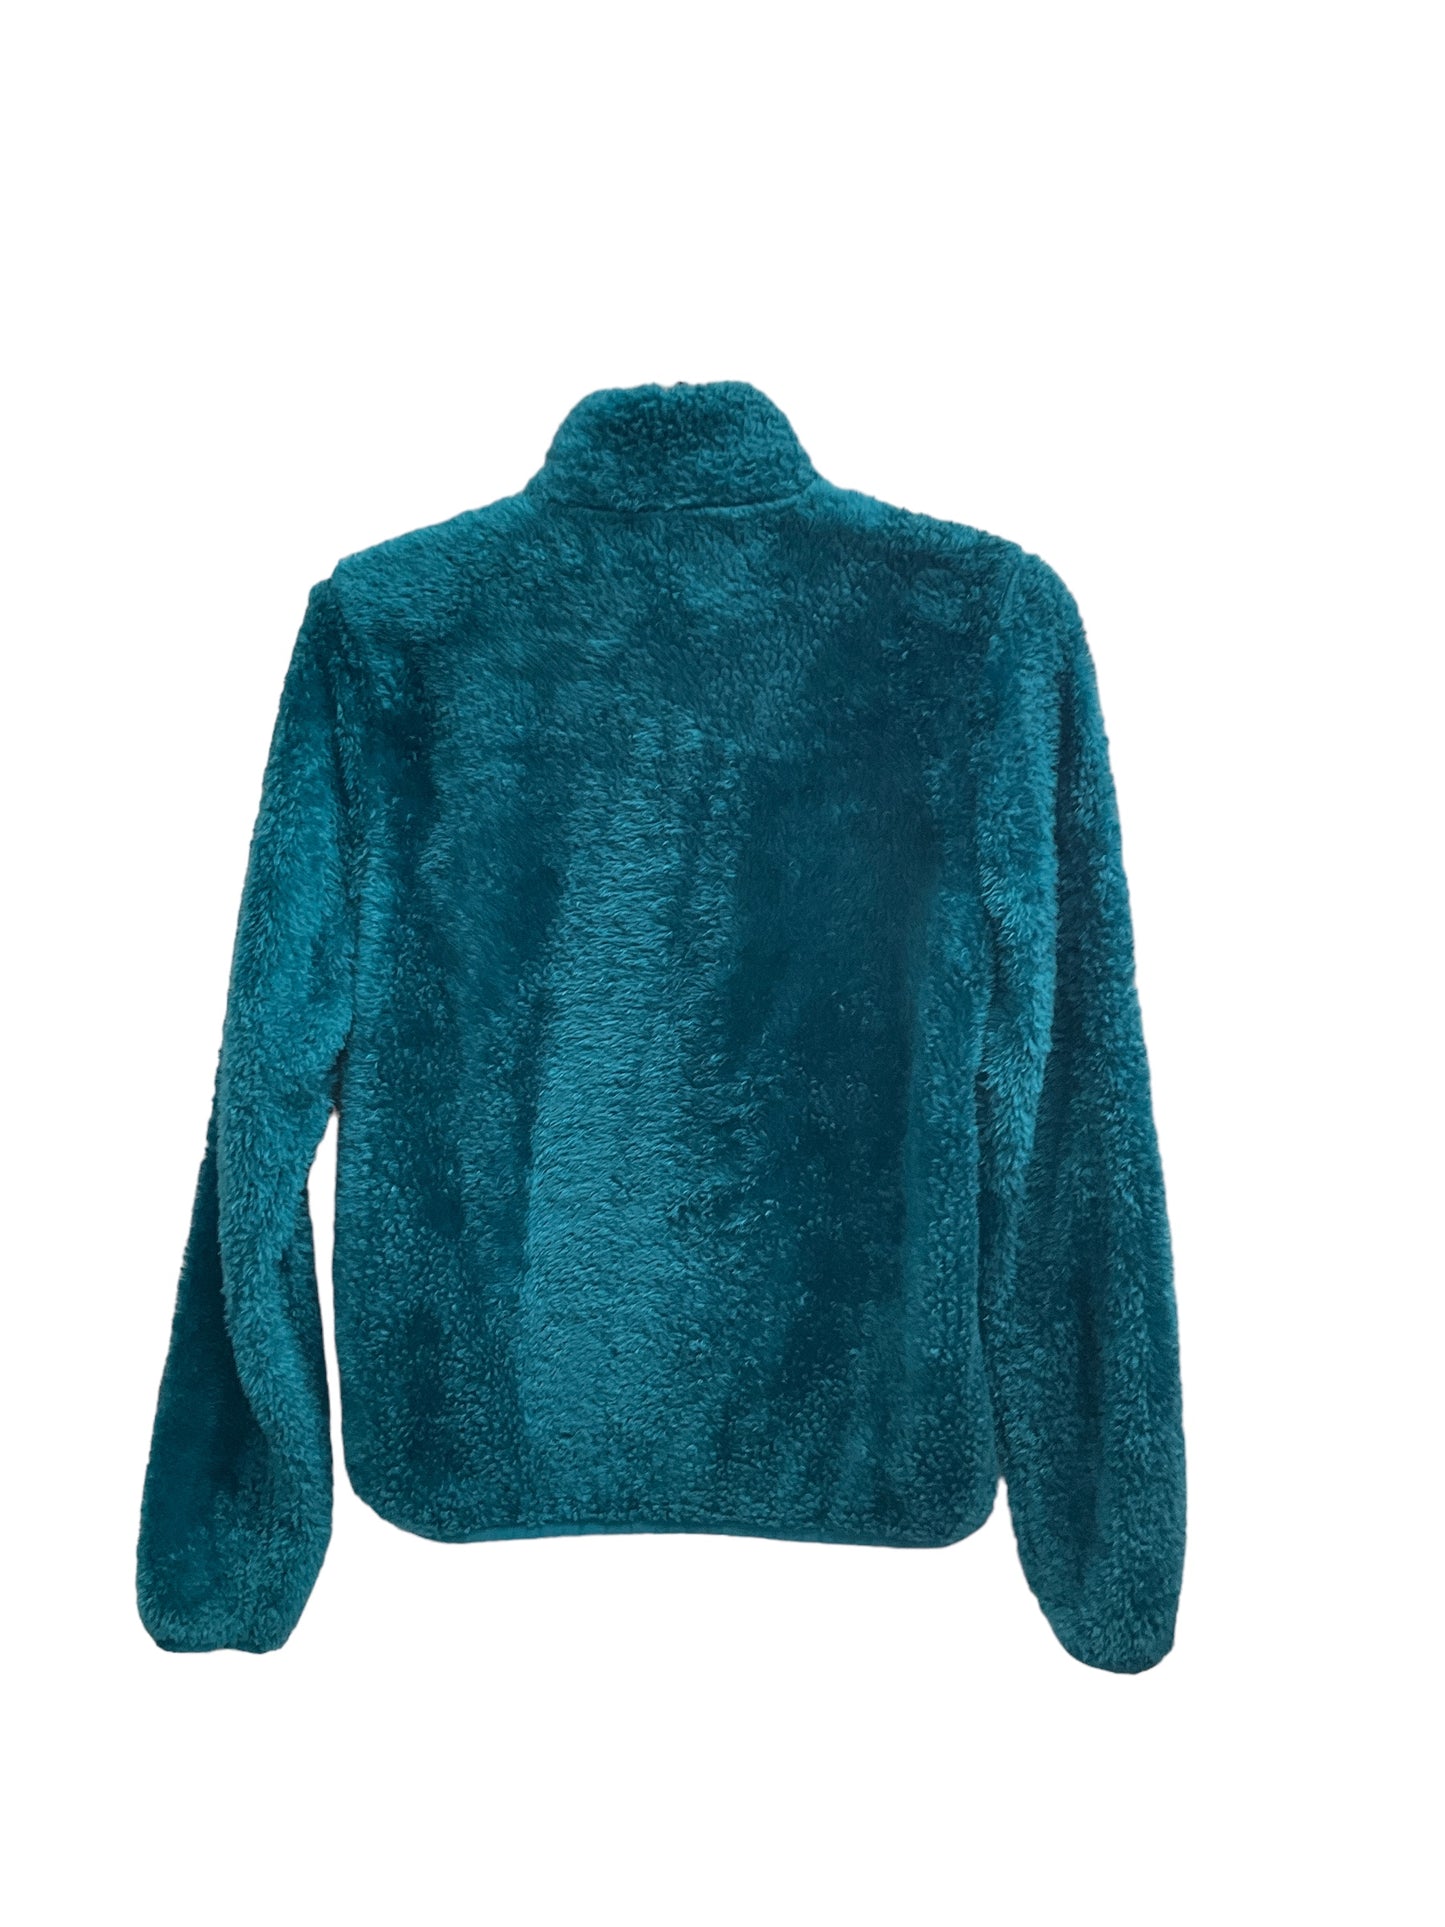 Jacket Fleece By Lilly Pulitzer  Size: Xs